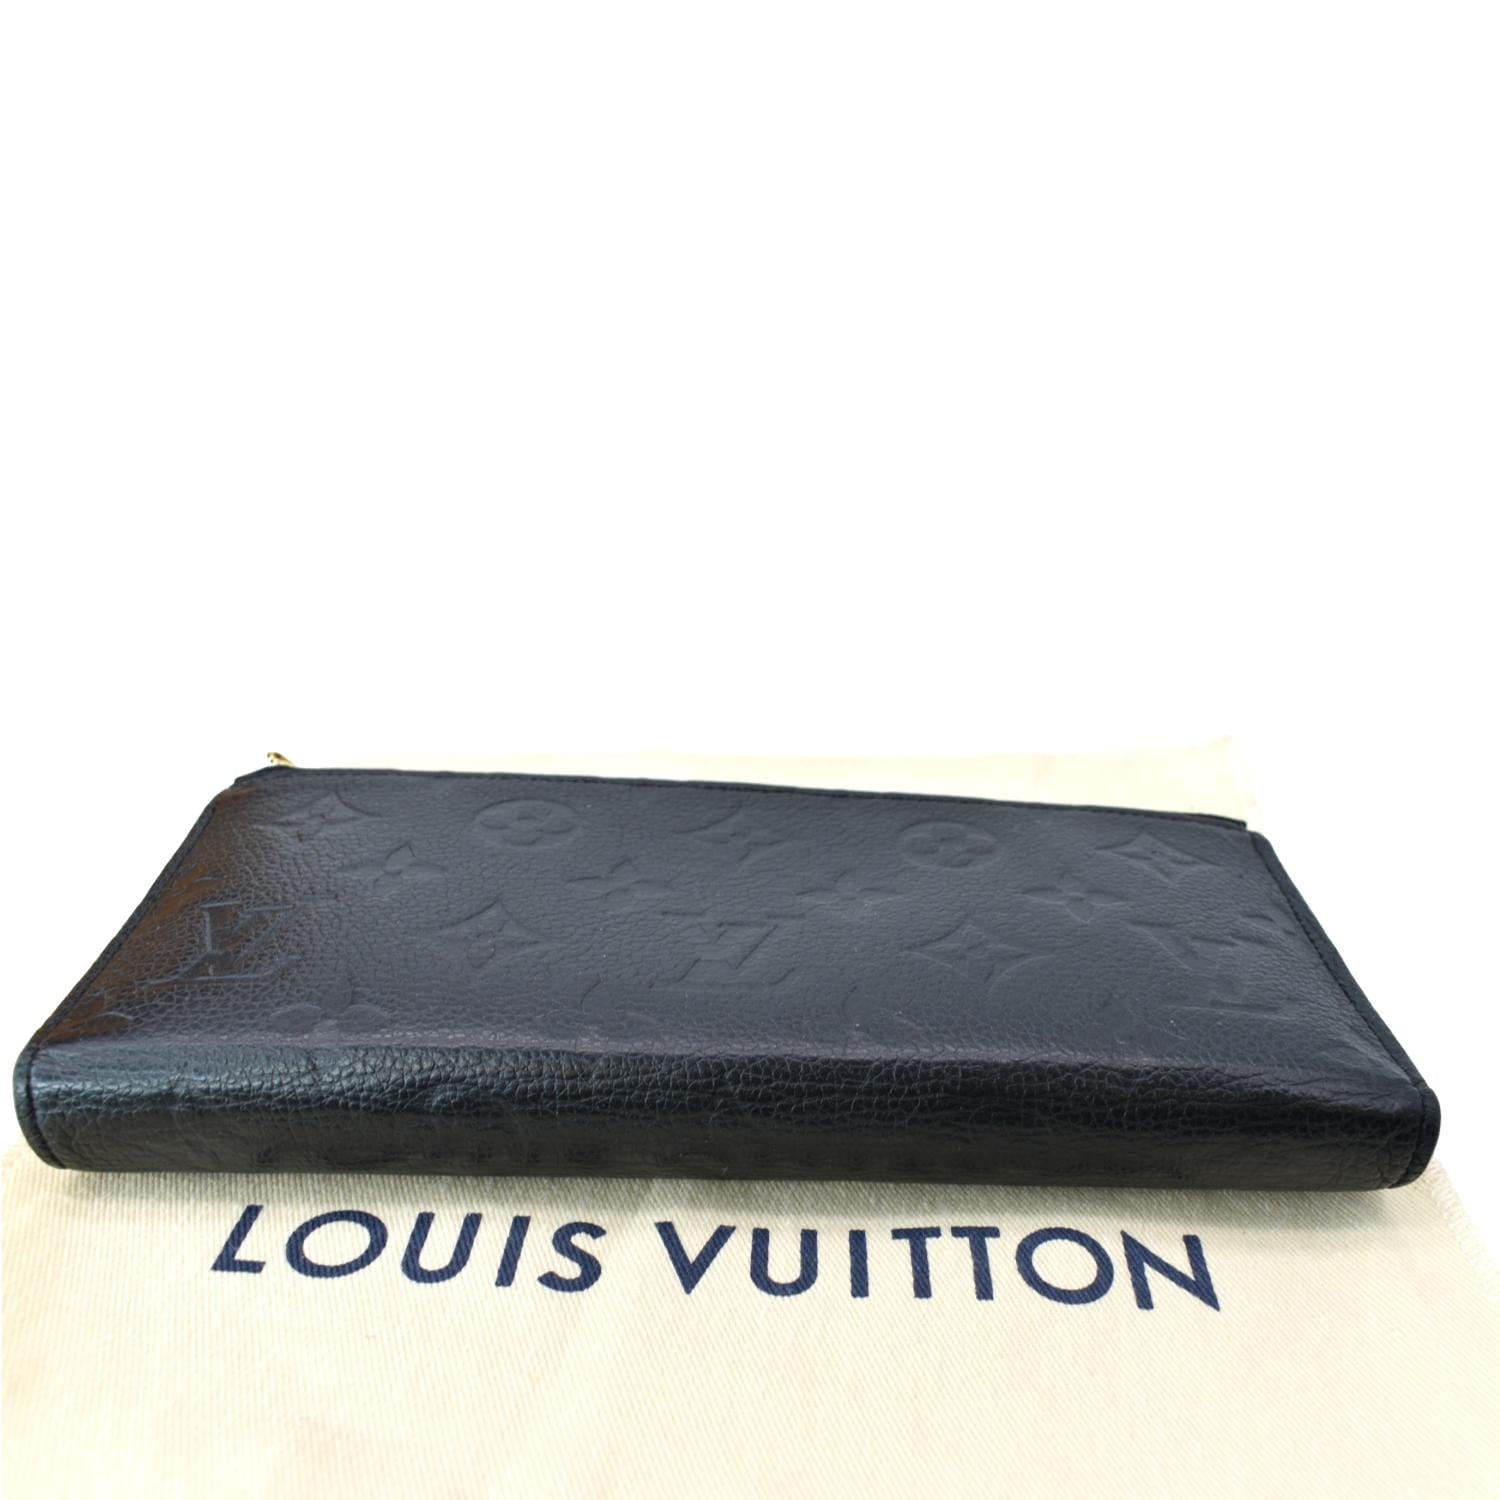 wallet monogram empreinte leather